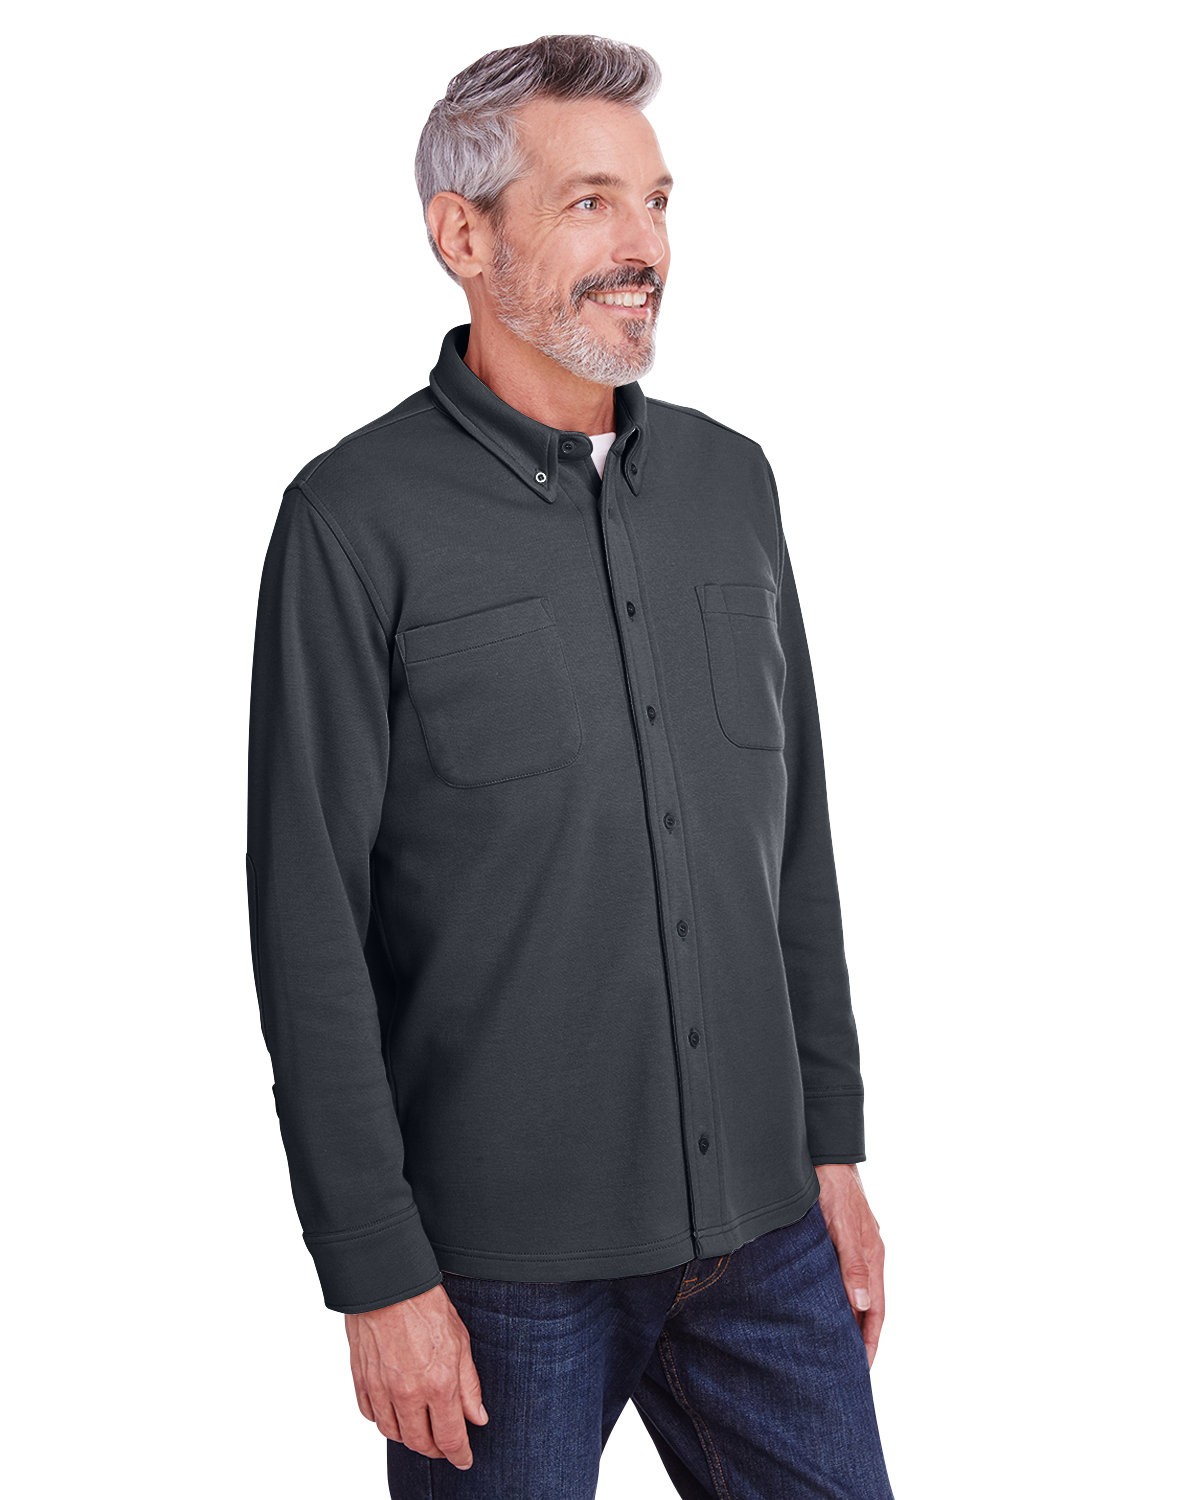 Harriton Adult StainBloc Pique Fleece Shirt Jacket M708 Long Sleeves XS-4XL